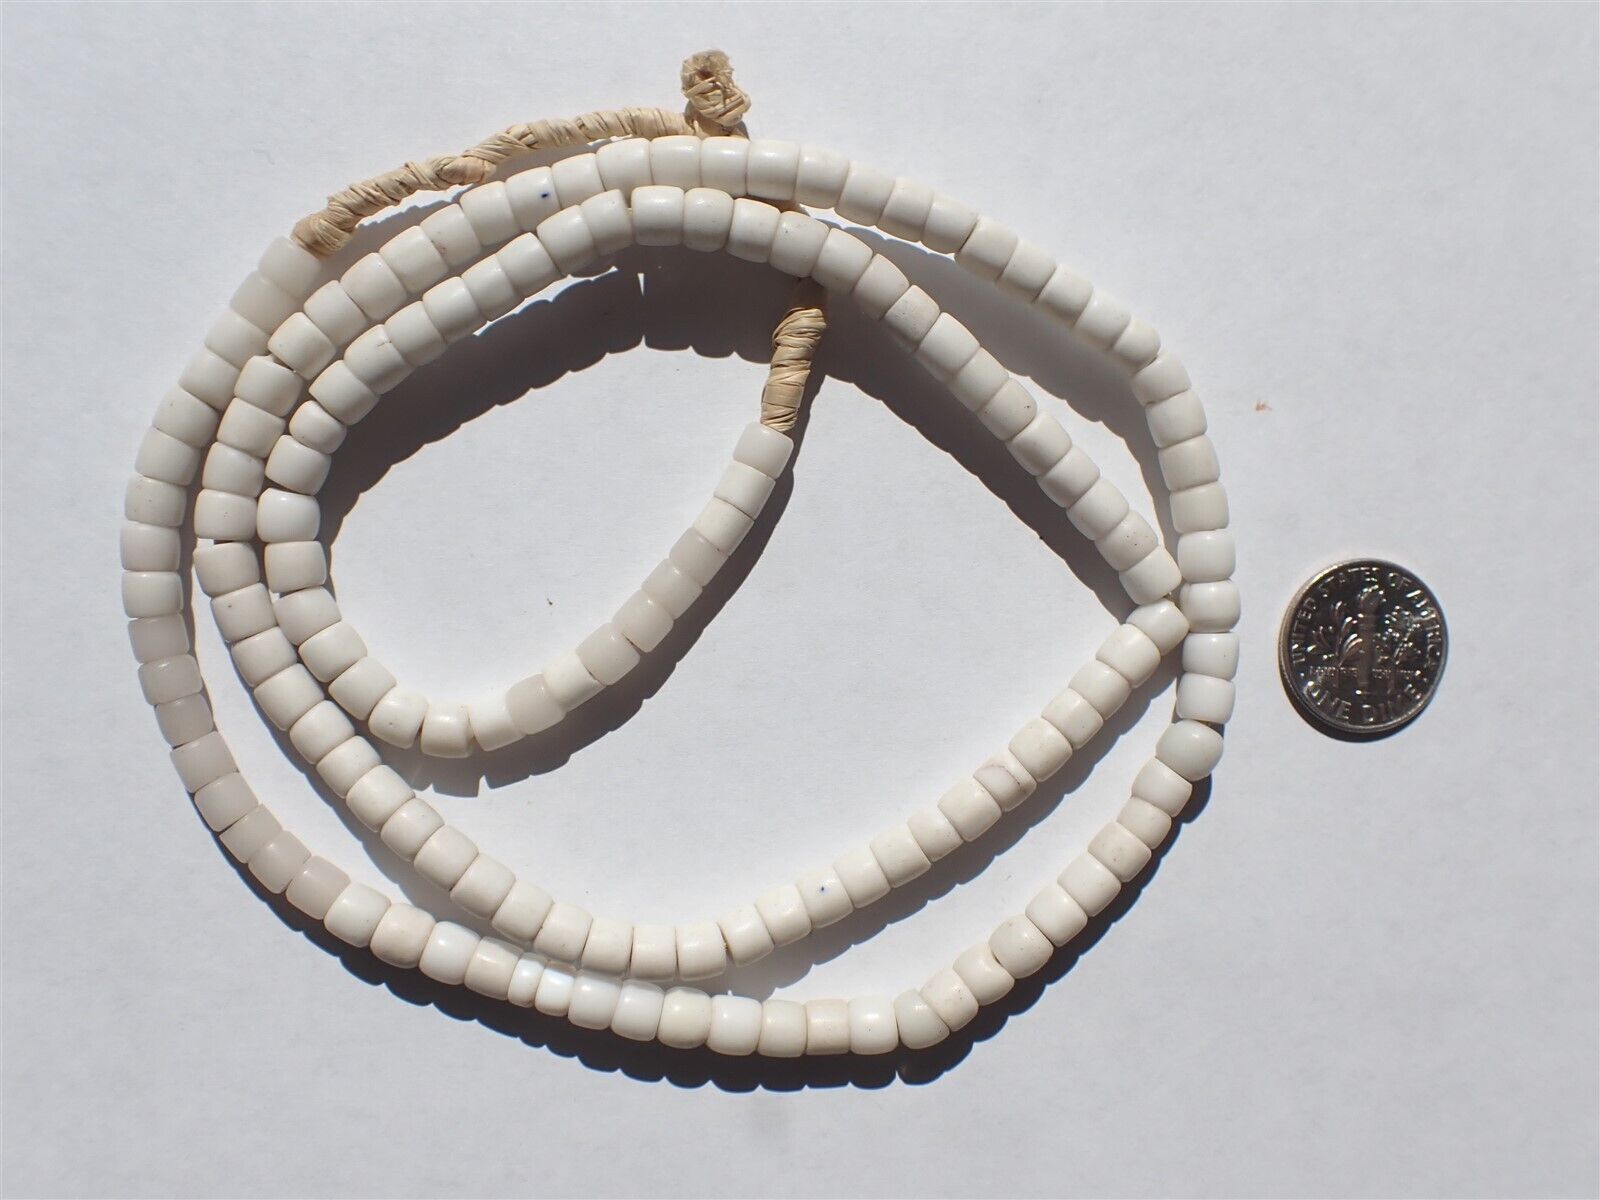 Antique Venetian Pony size White glass Trade Beads - 5-5.5mm - Strand